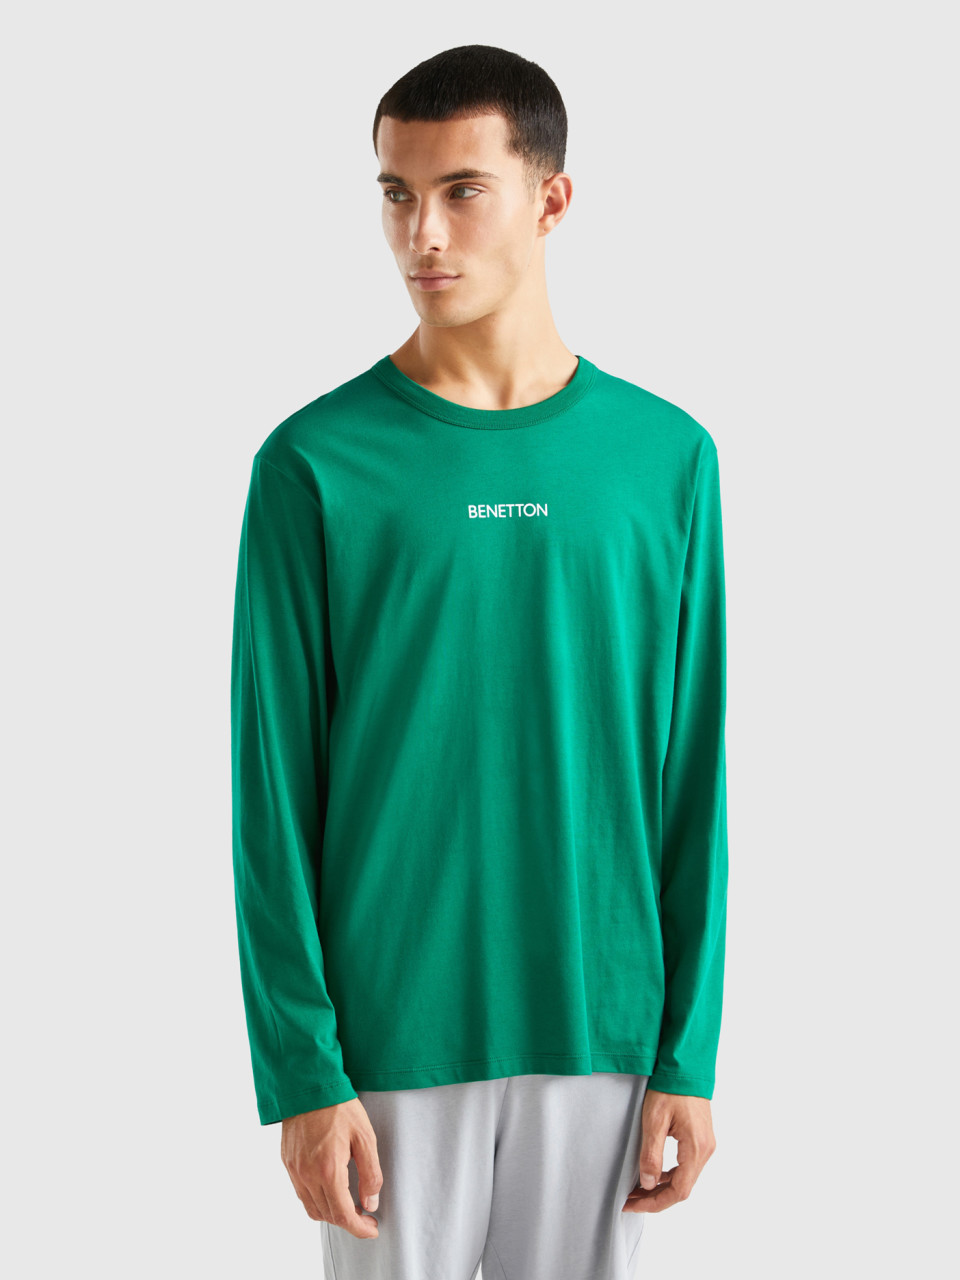 Benetton, Long Sleeve 100% Cotton Top, Green, Men